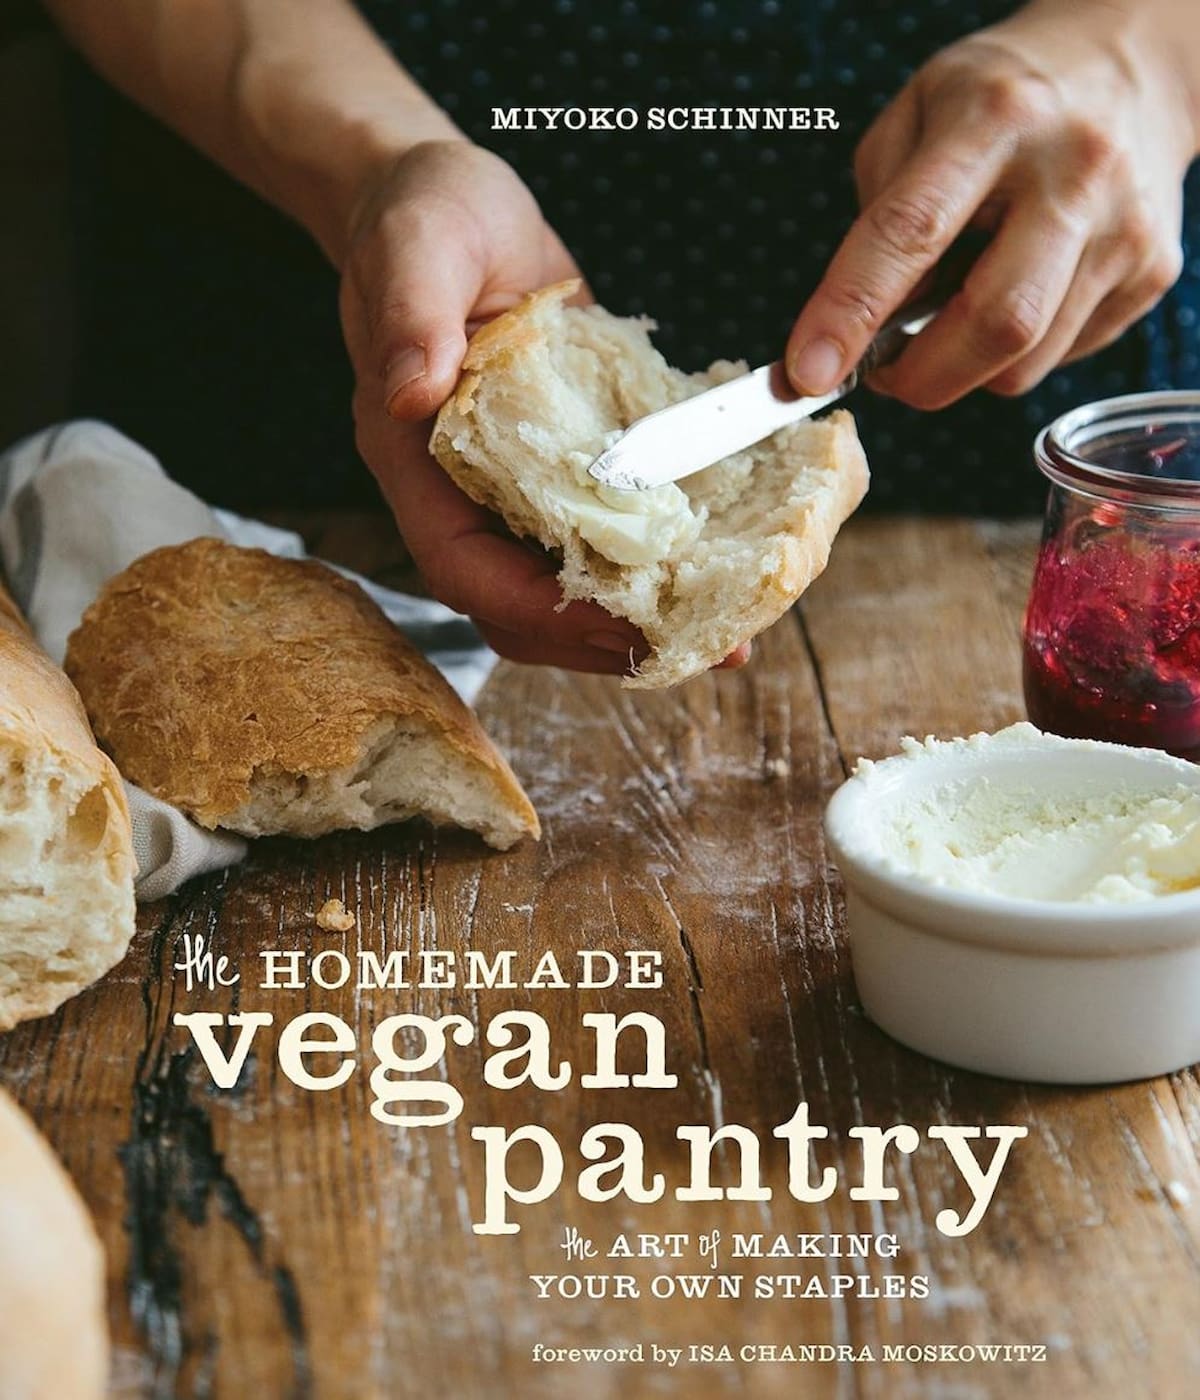 Cover art for The Homemade Vegan Pantry by Miyoko Schinner.